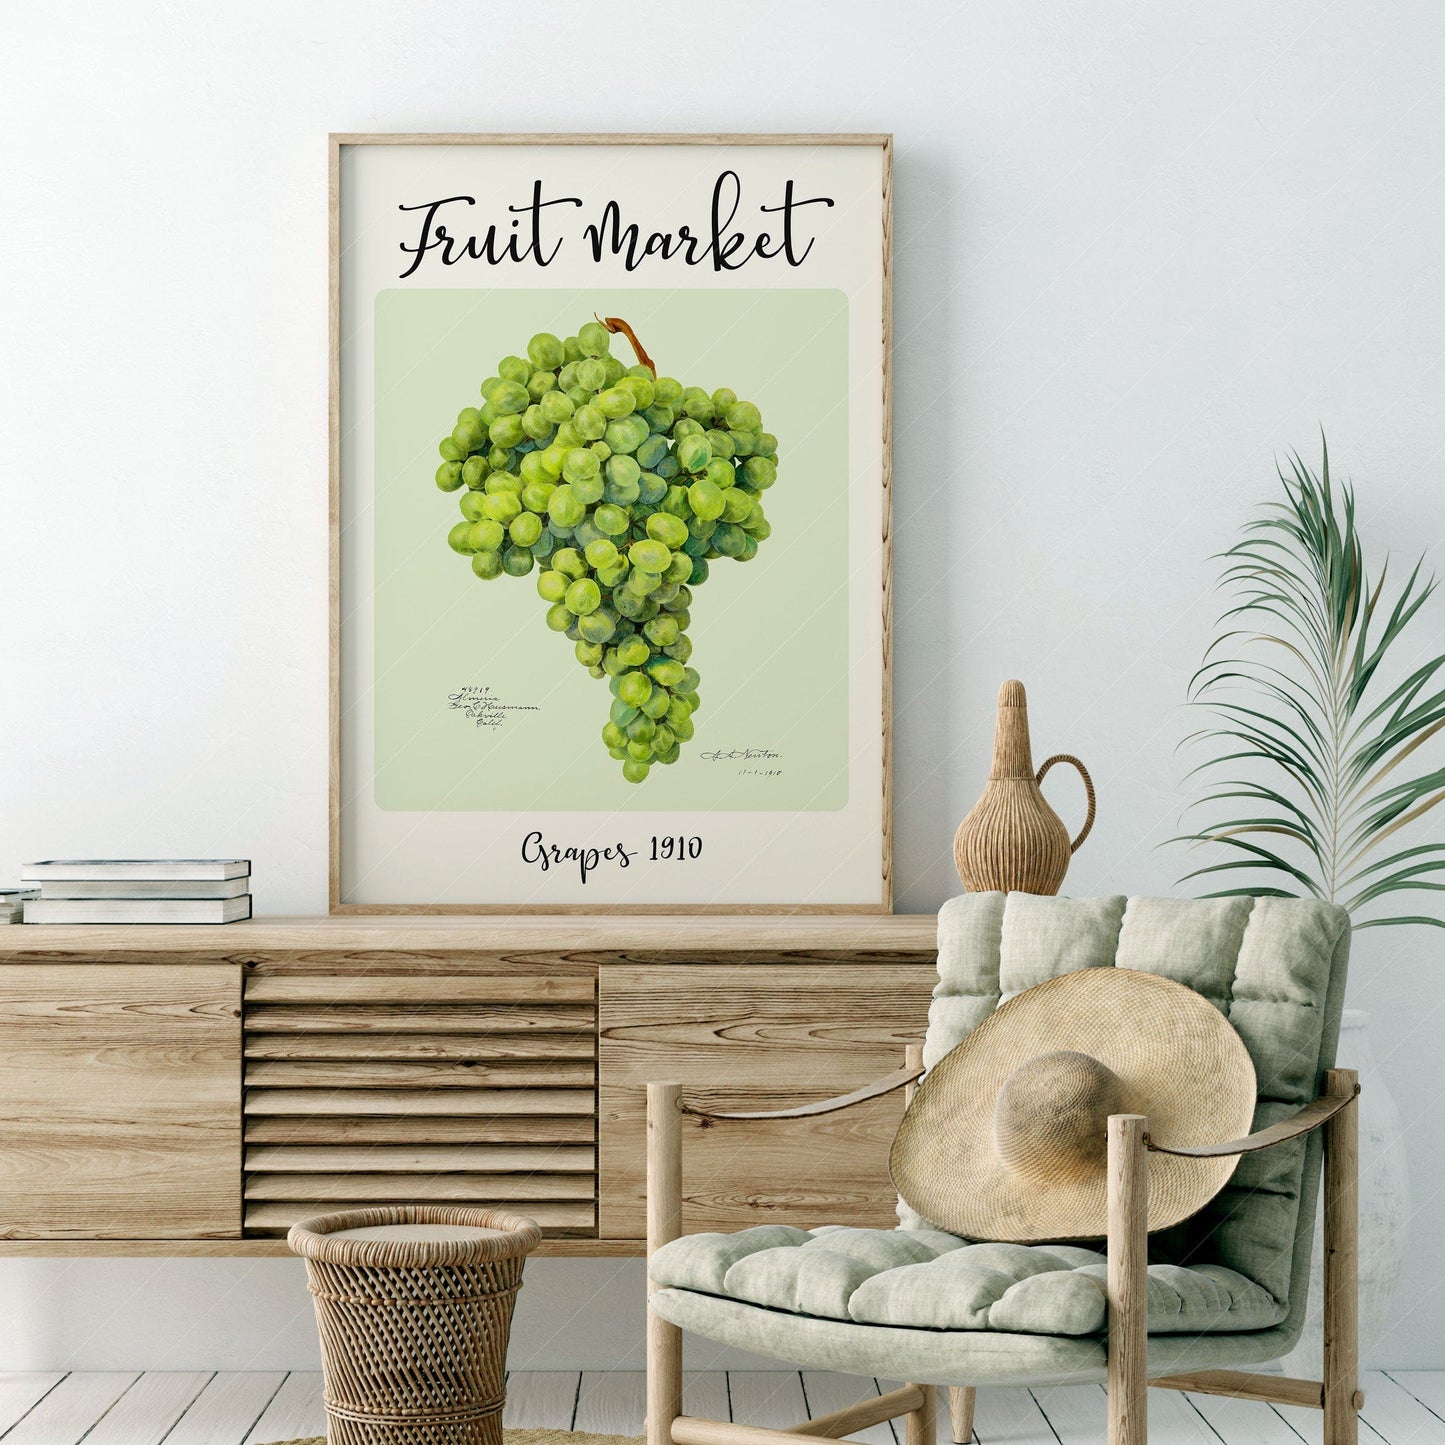 Home Poster Decor Single Fruit Market, Grapes Print, Kitchen Wall Decor, Vintage Kitchen, Wine Art, Light Mint Green, Pastel Color, Dine Room, Farmhouse Home Decor